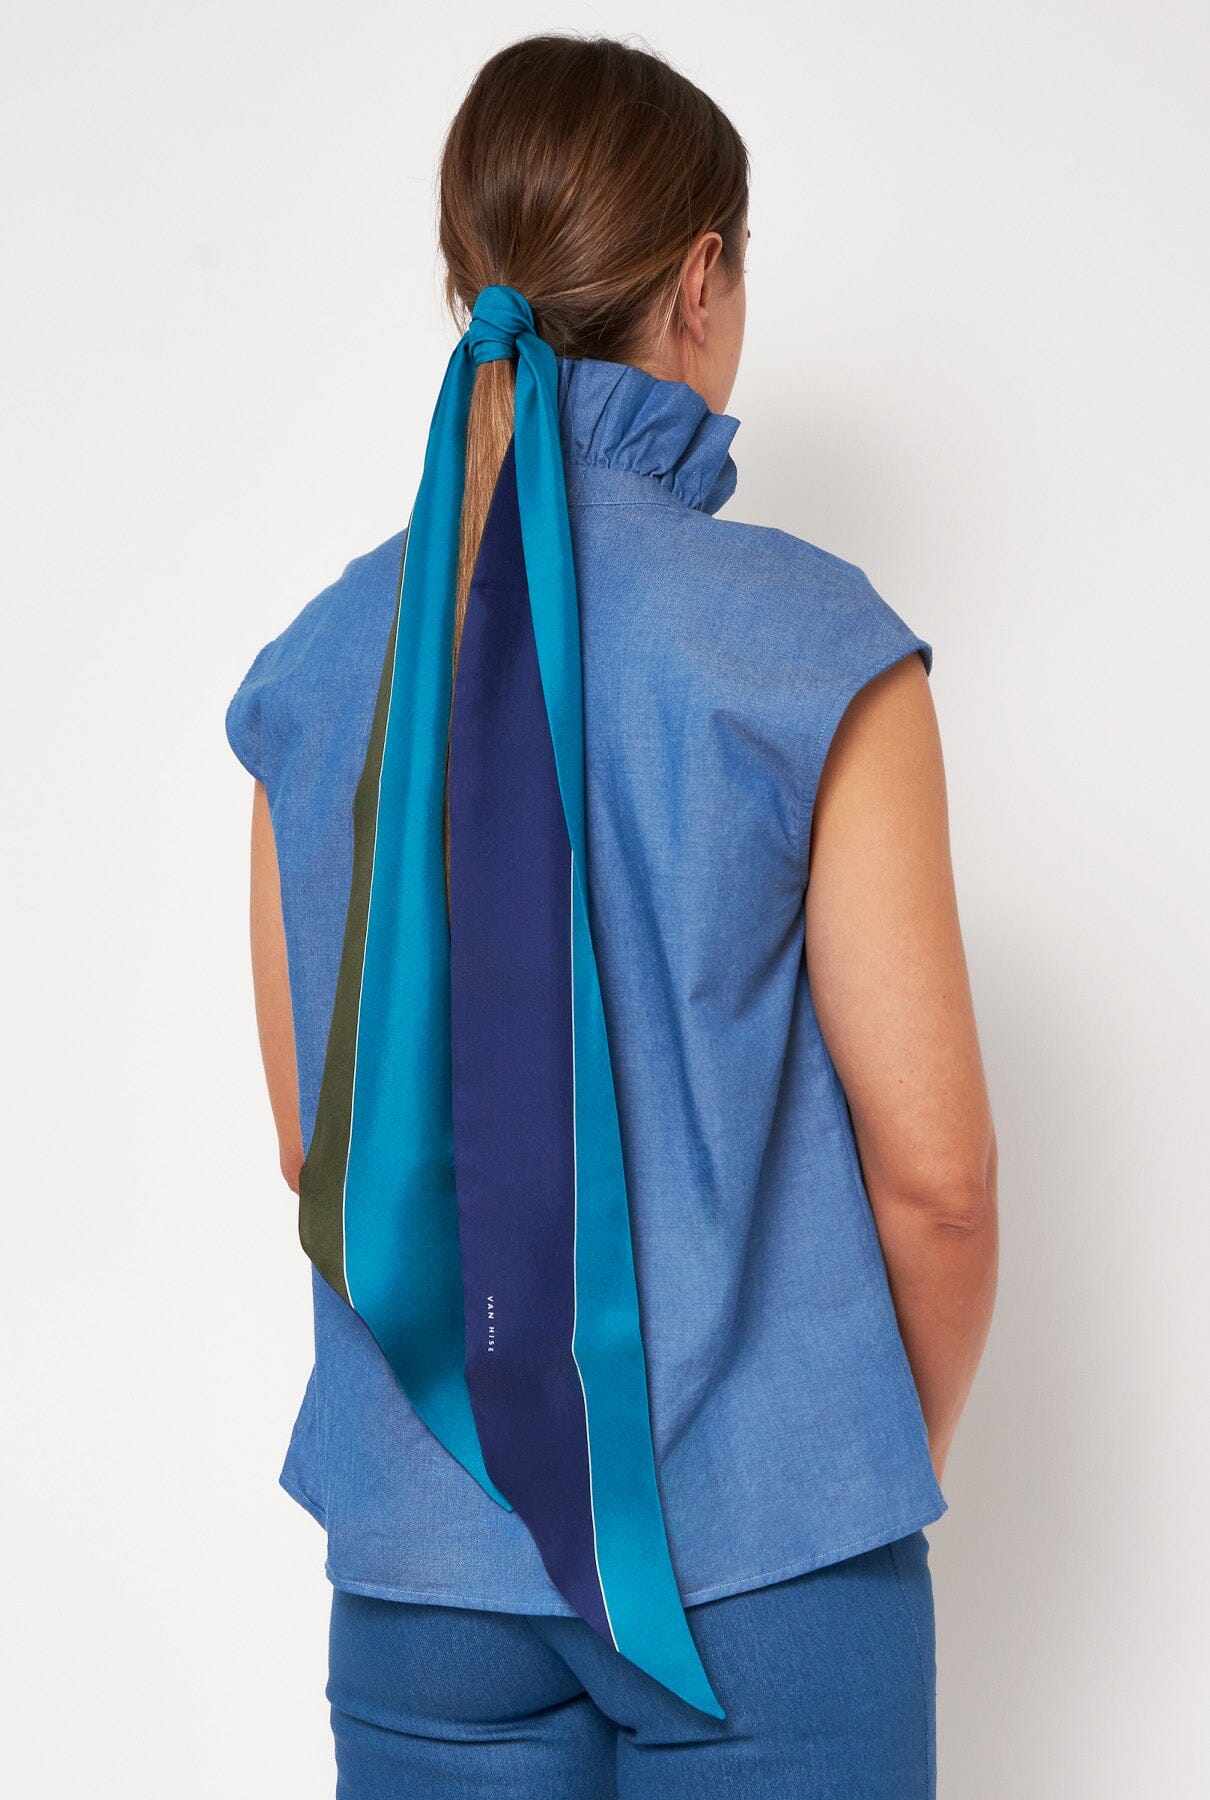 Veronica scarf turquoise Foulards & Scarves Van Hise 